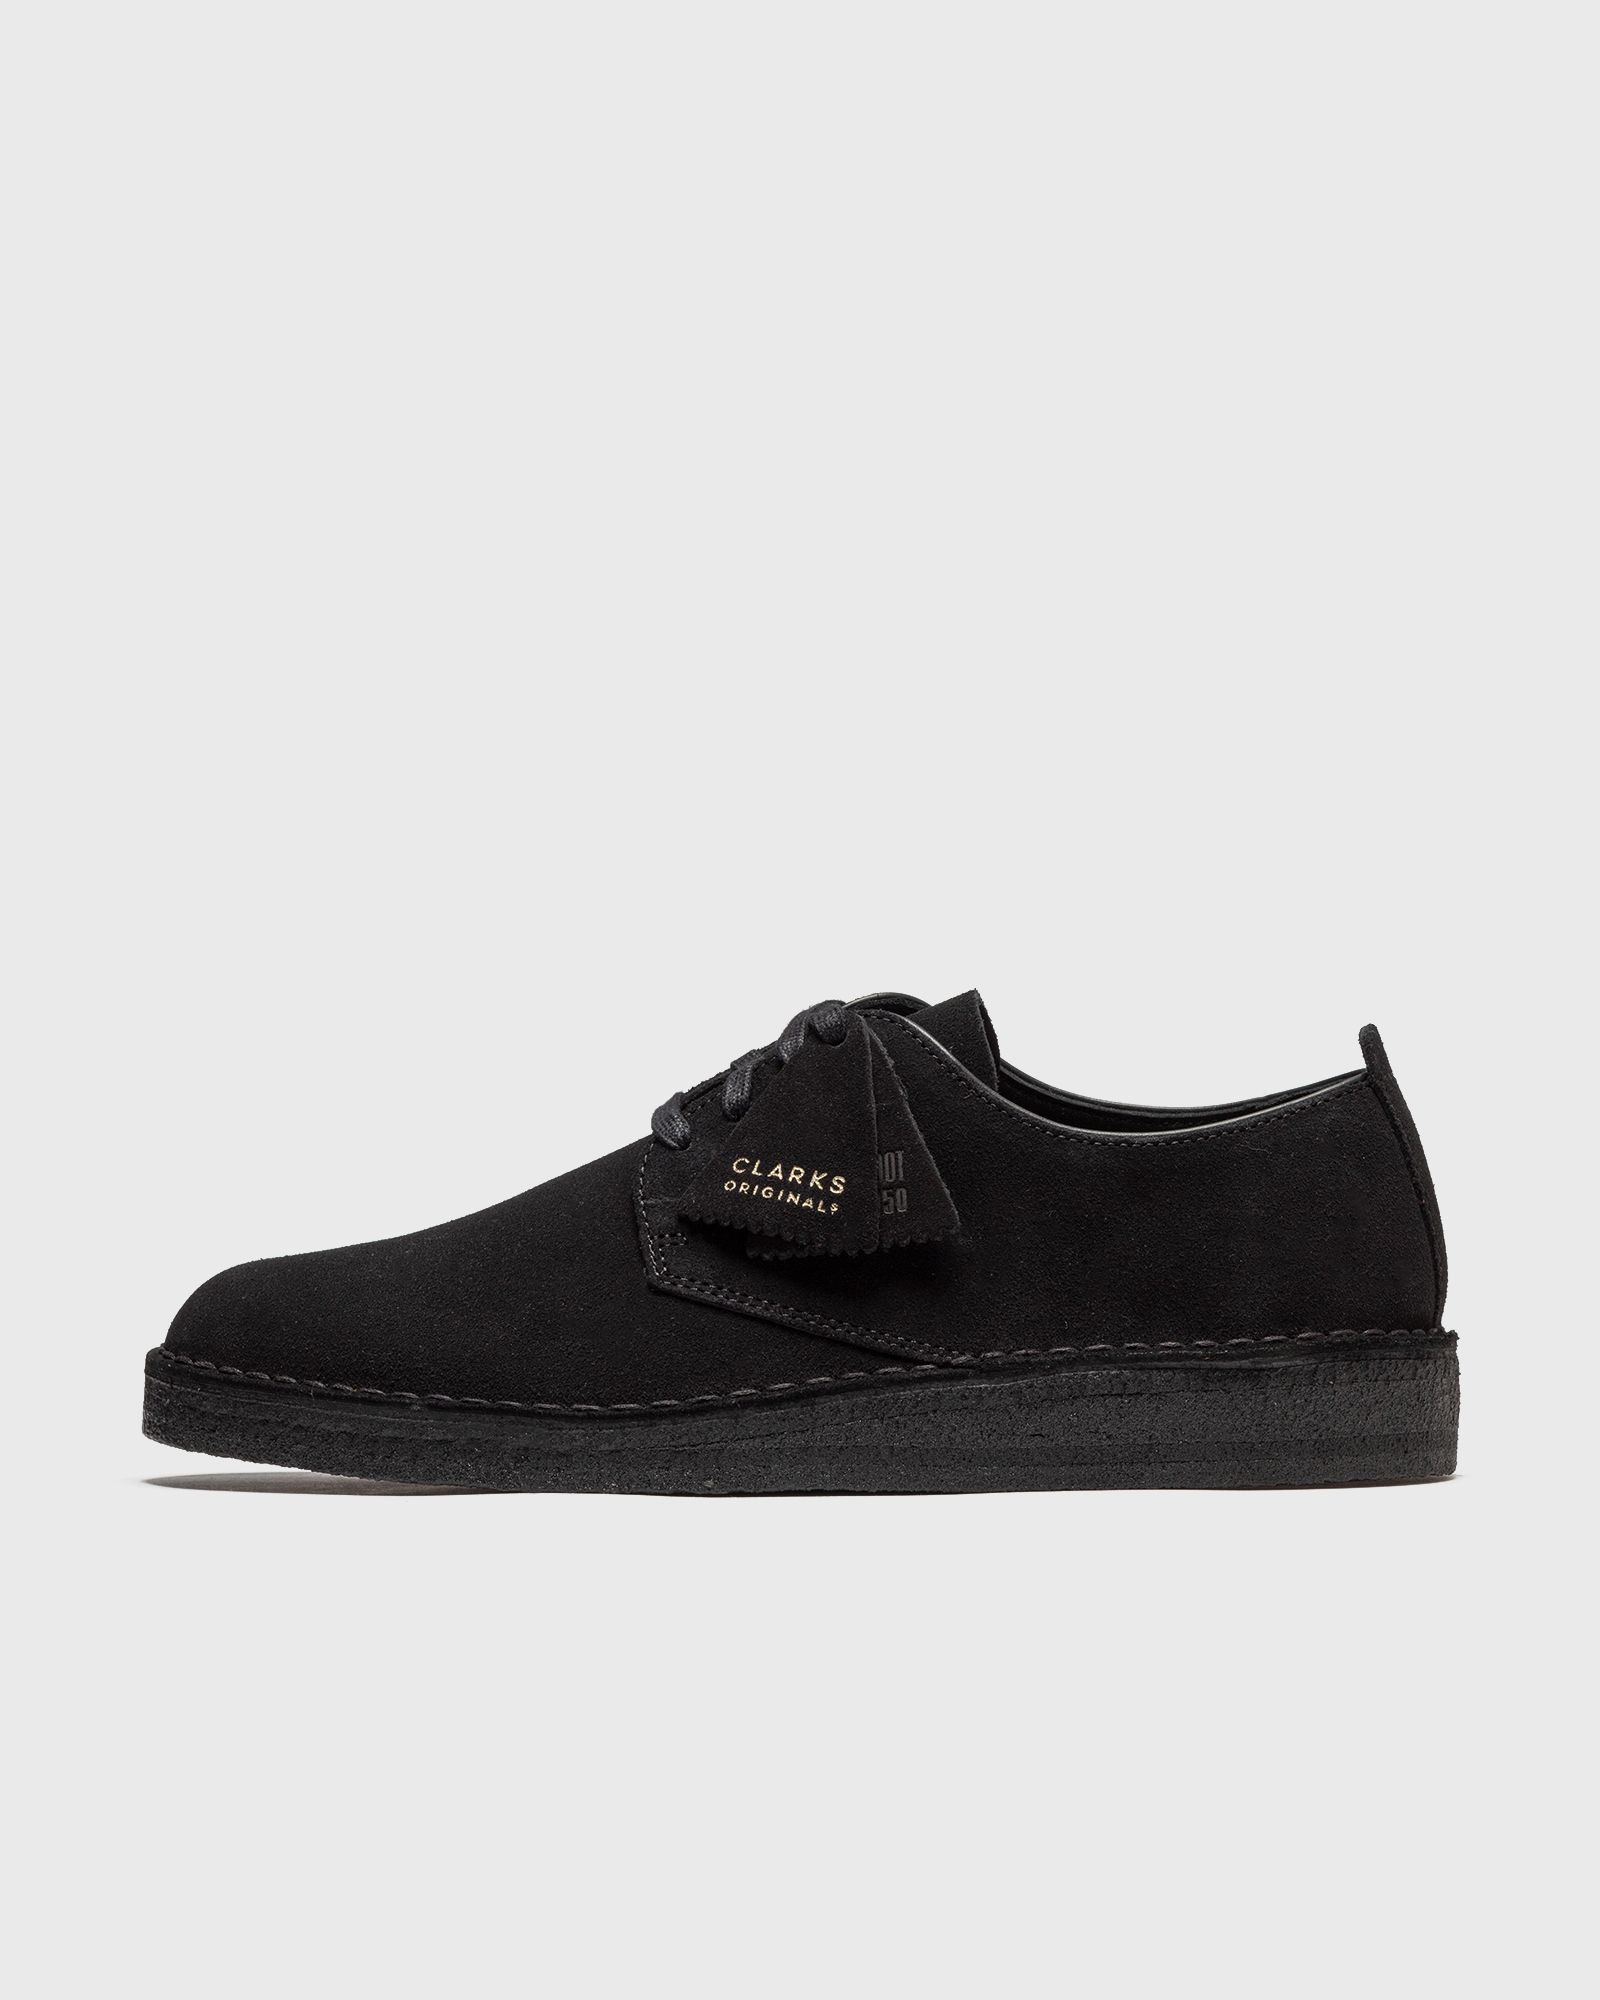 Clarks Originals Coal London men Casual Shoes black in Größe:42 von Clarks Originals